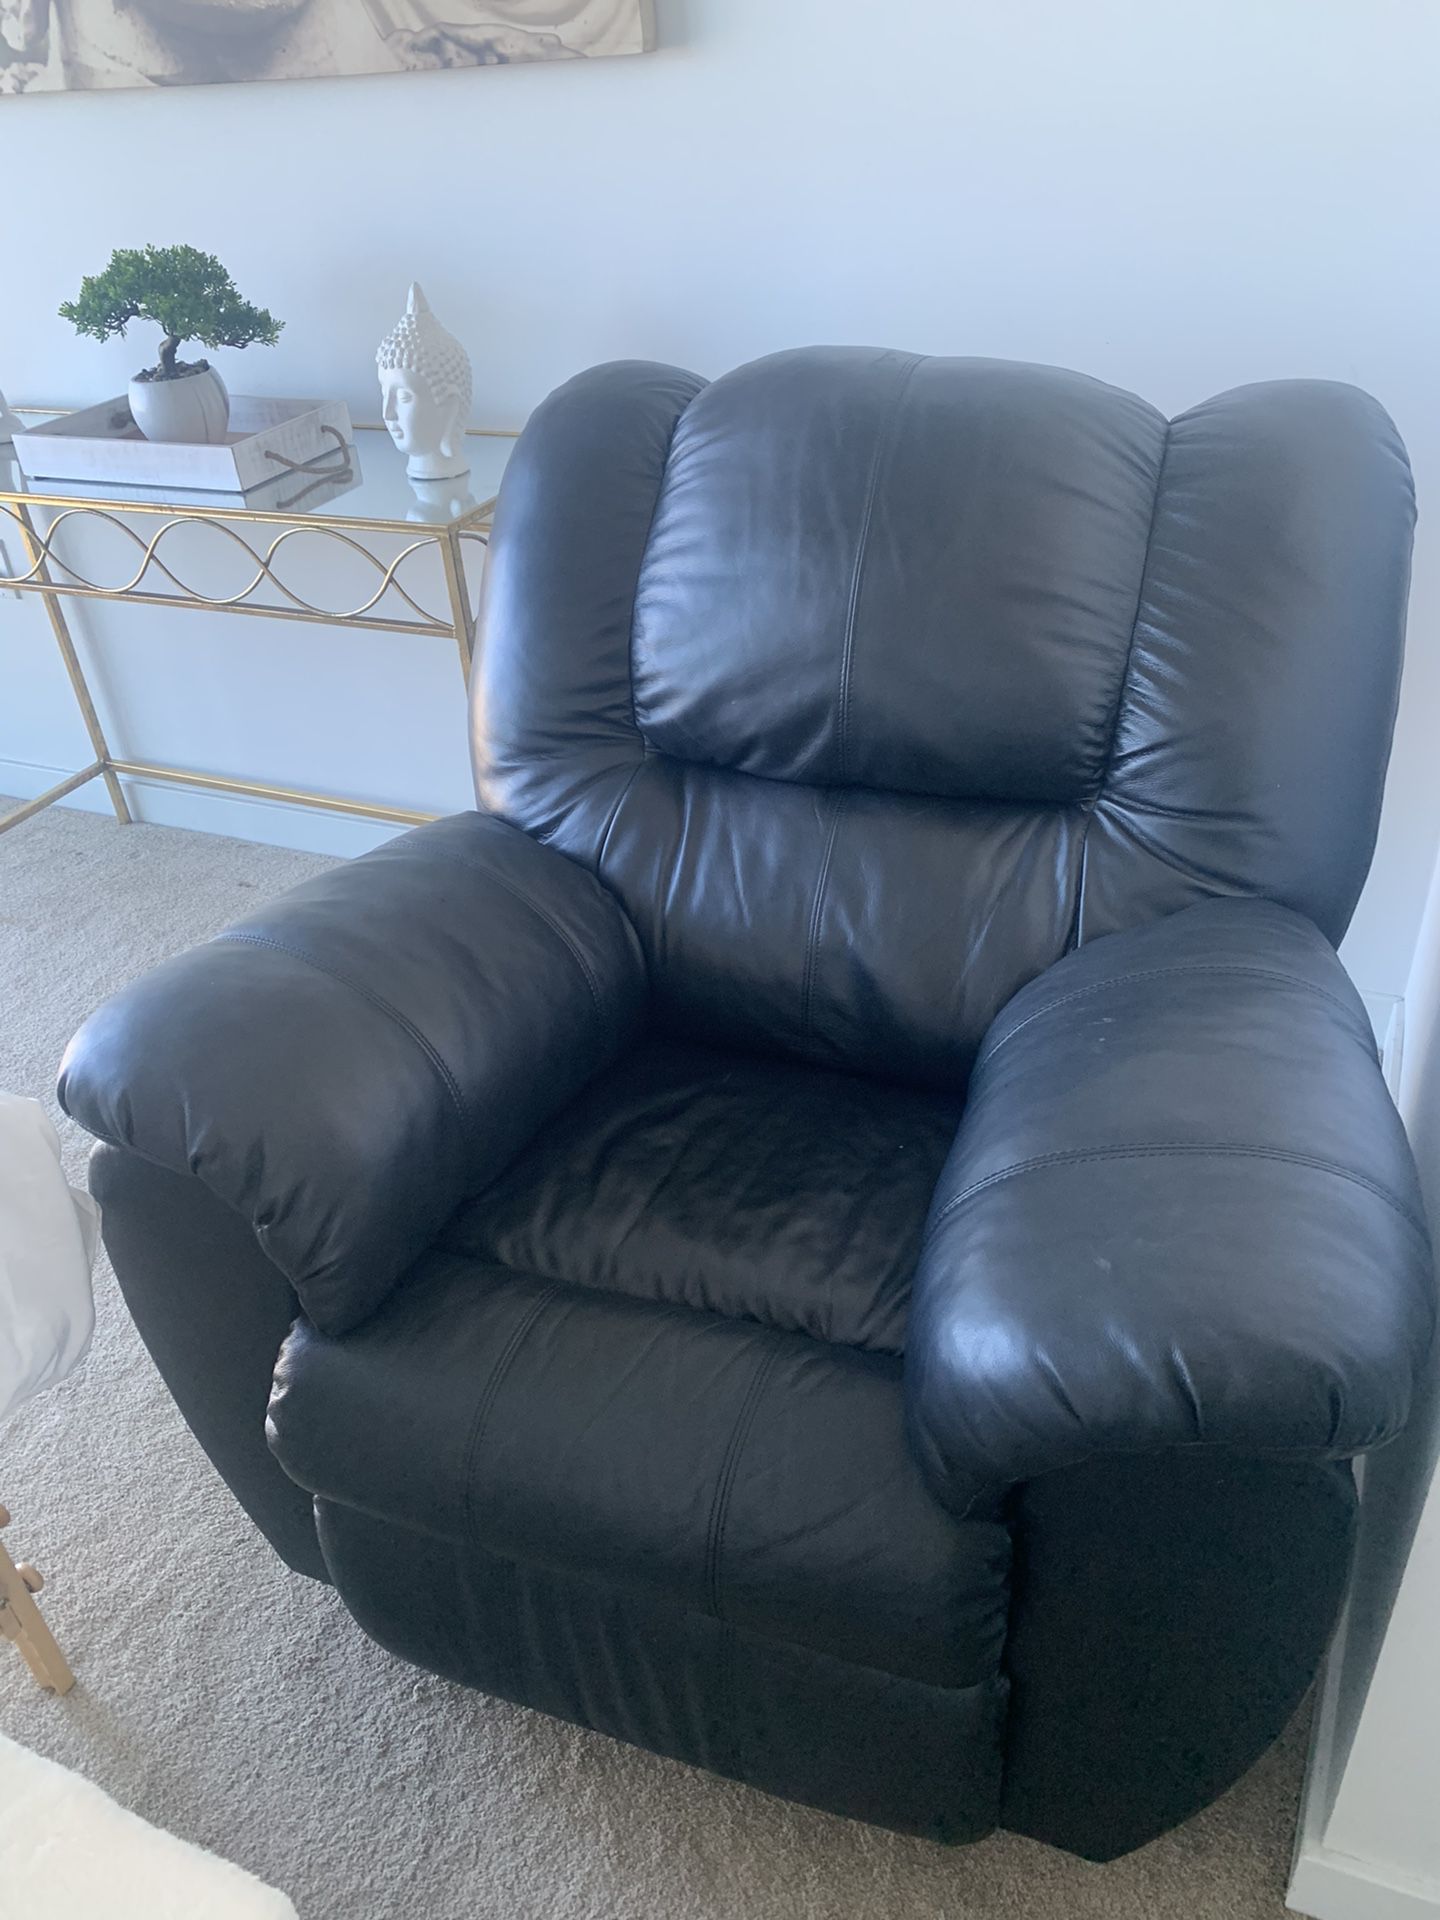 Super comfy black reclining chair :)